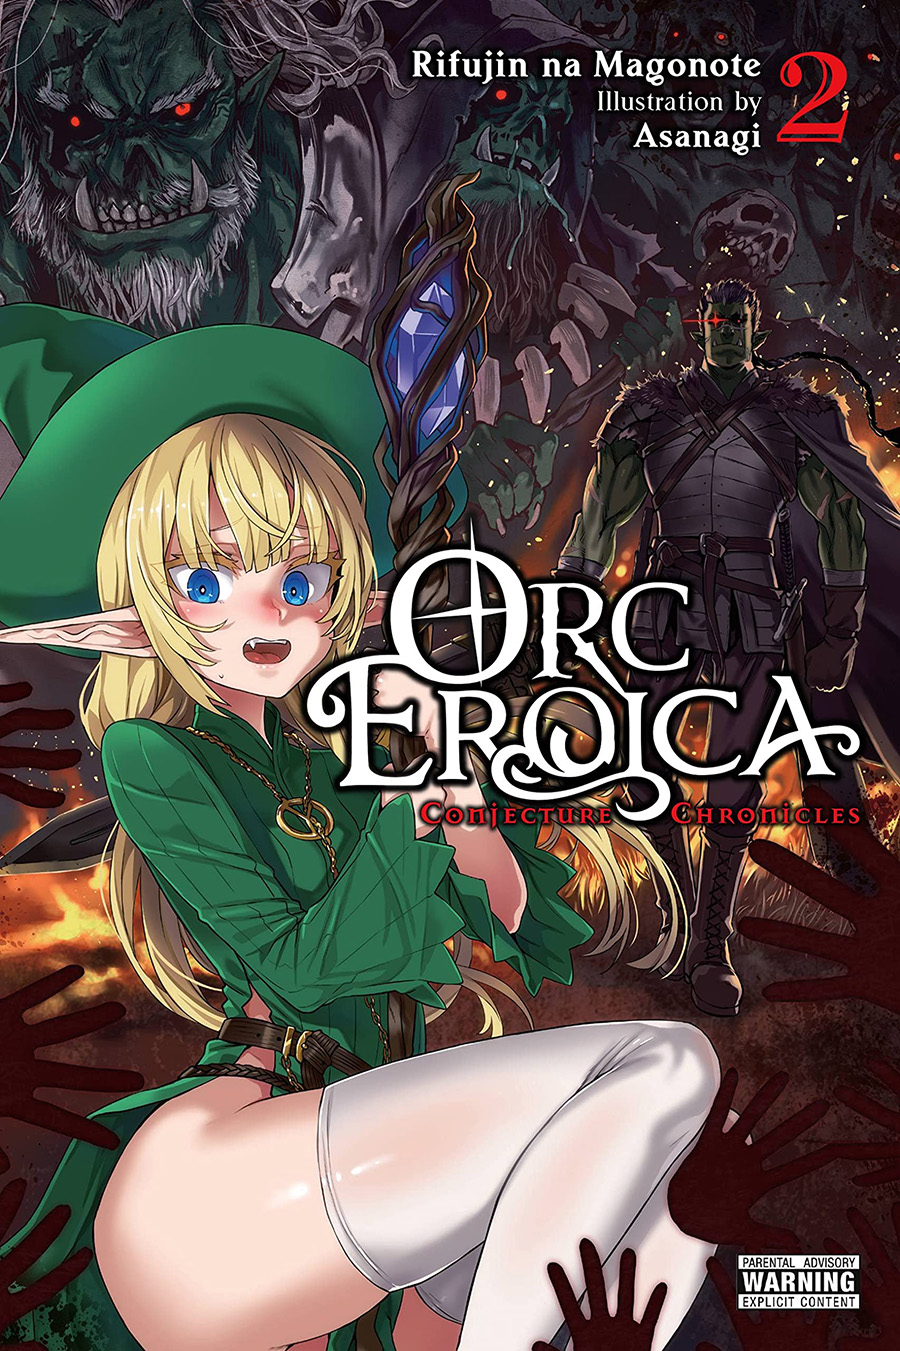 Orc Eroica Conjecture Chronicles Light Novel Vol 2